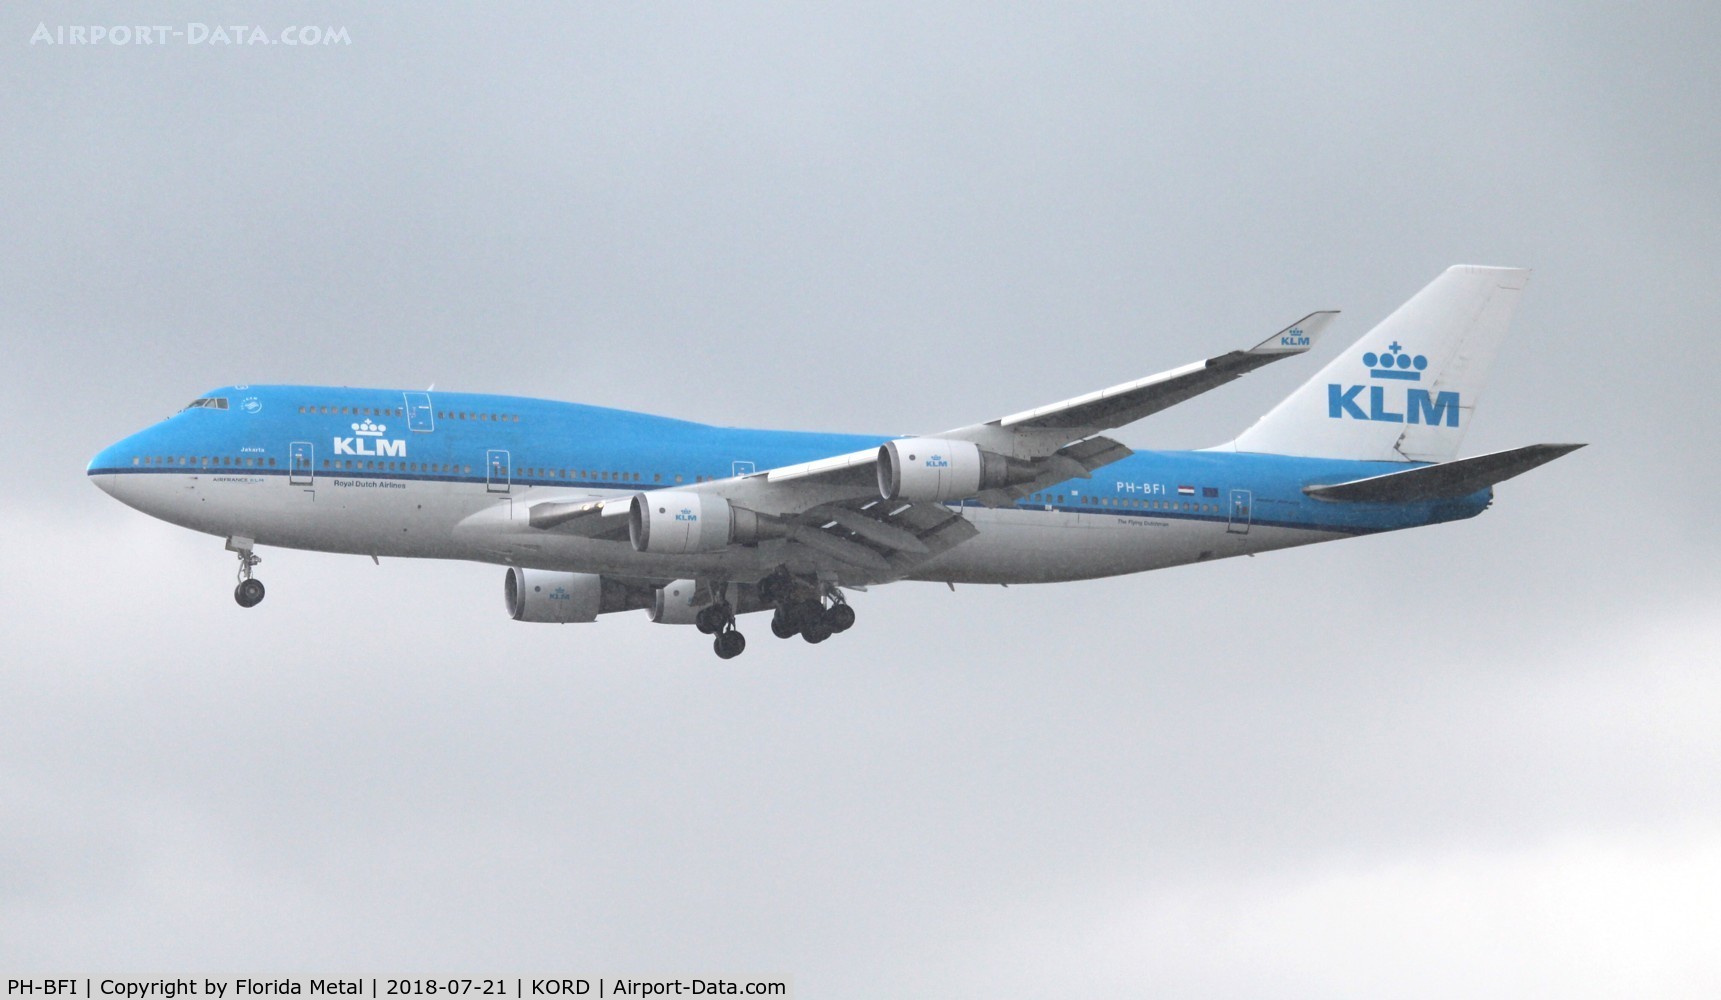 PH-BFI, 1991 Boeing 747-406BC C/N 25086, KLM 747-400